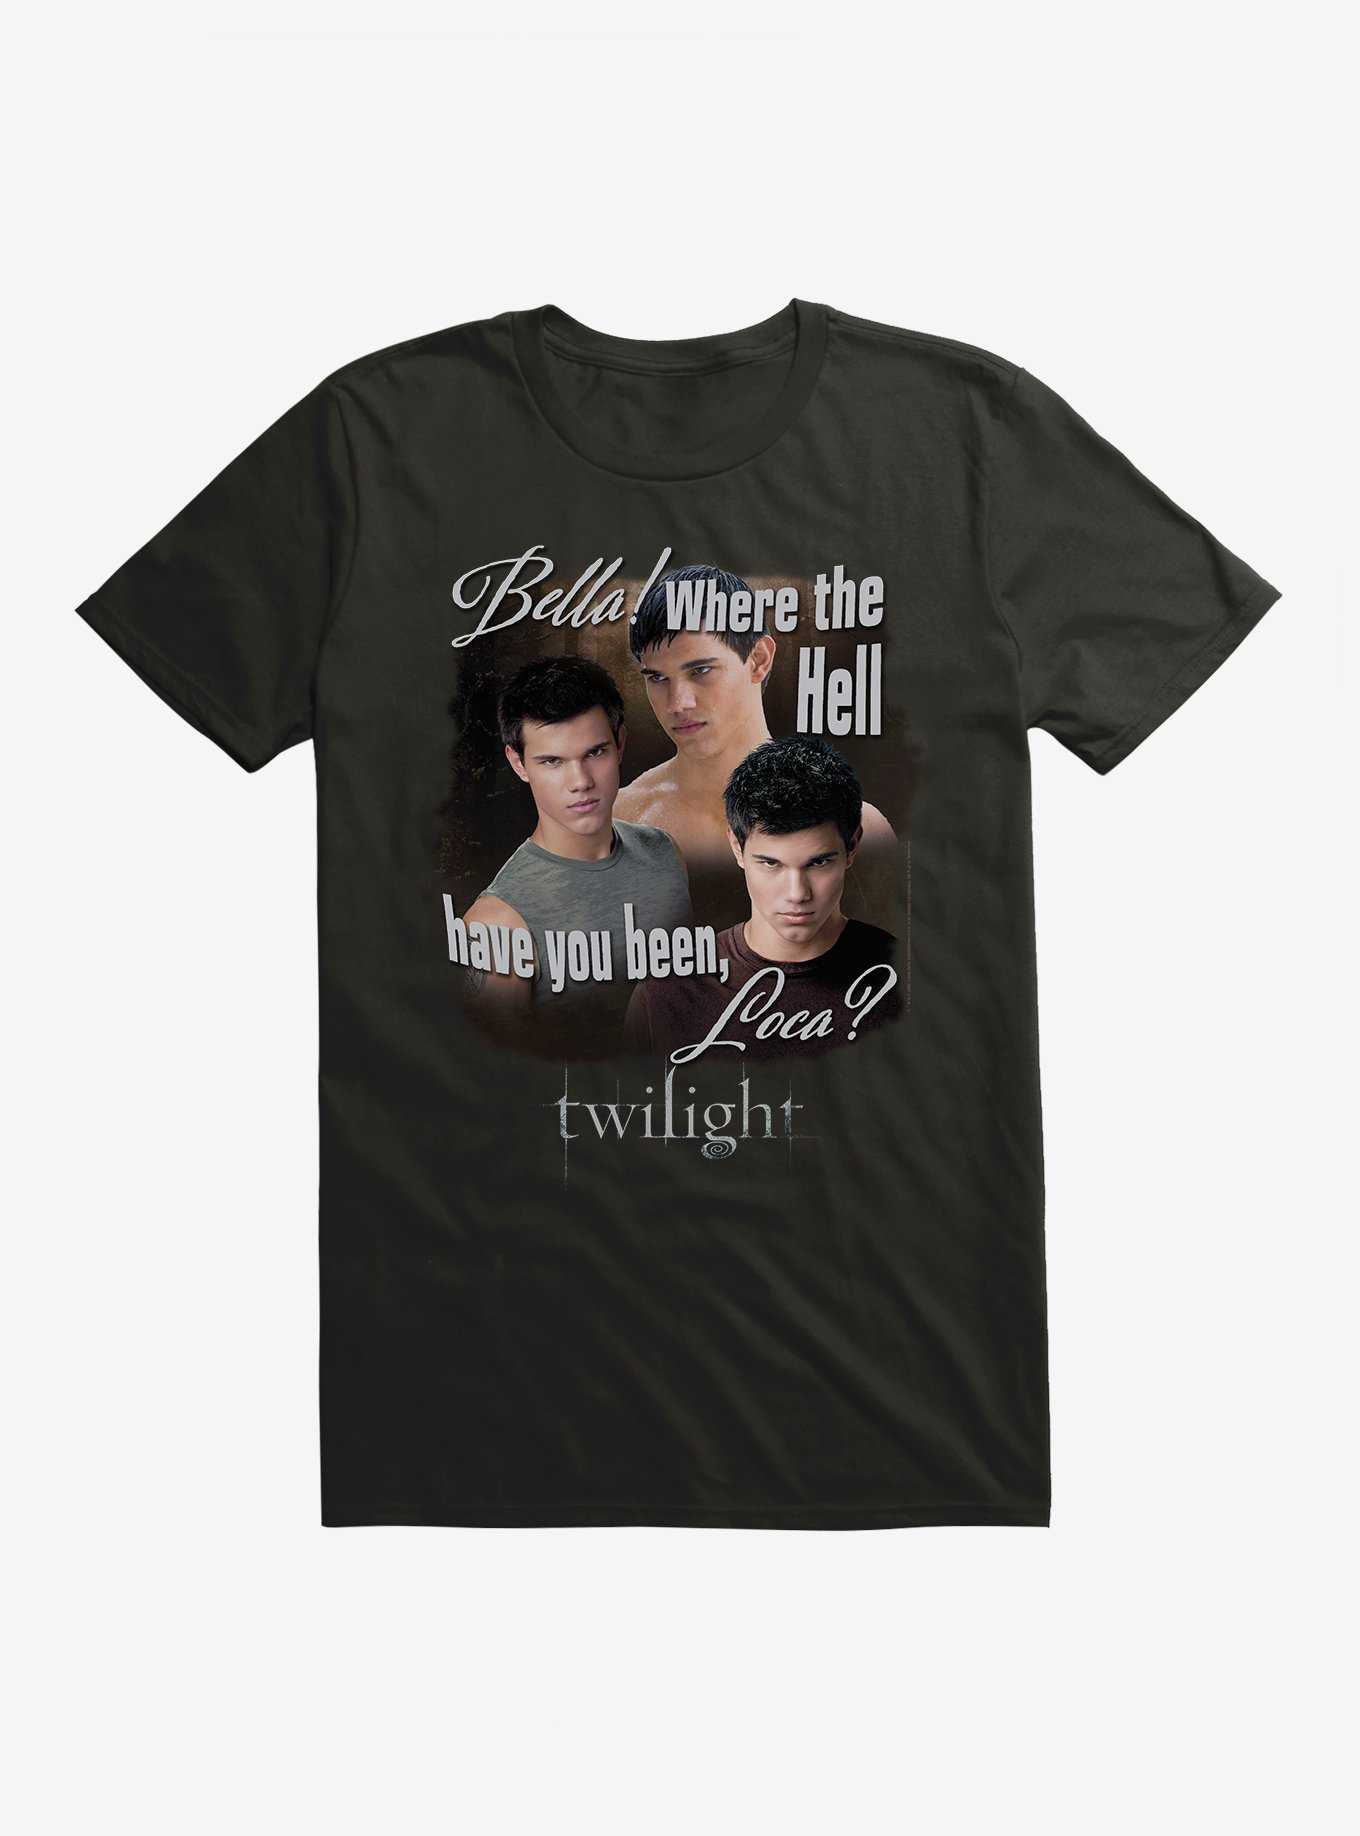 Twilight Saga Christmas Holiday Edition Essential T-Shirt for